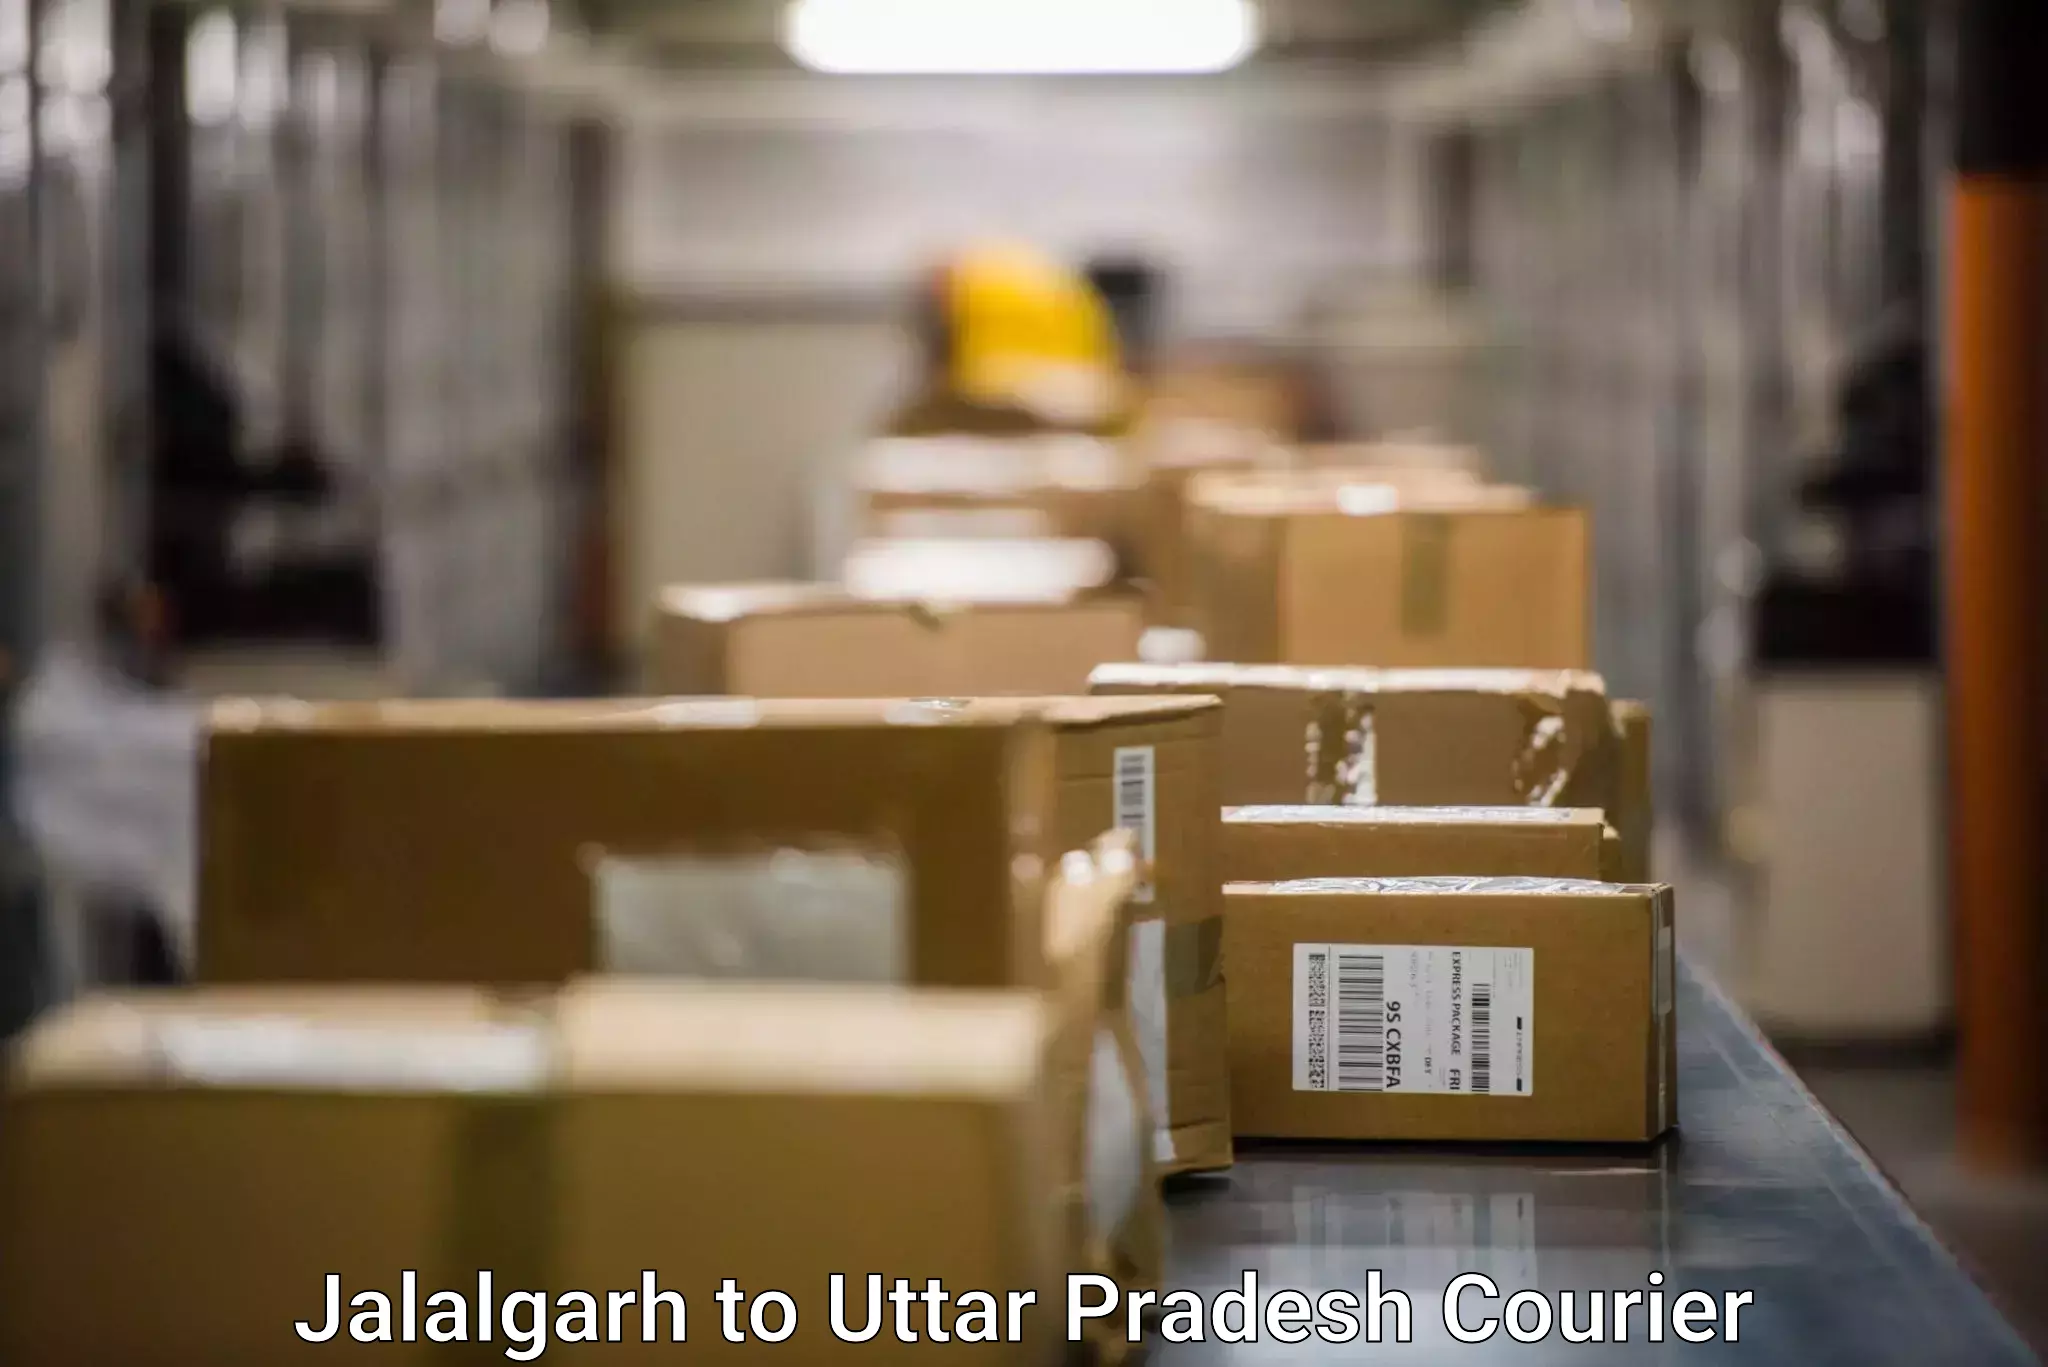 Package tracking in Jalalgarh to Azamgarh